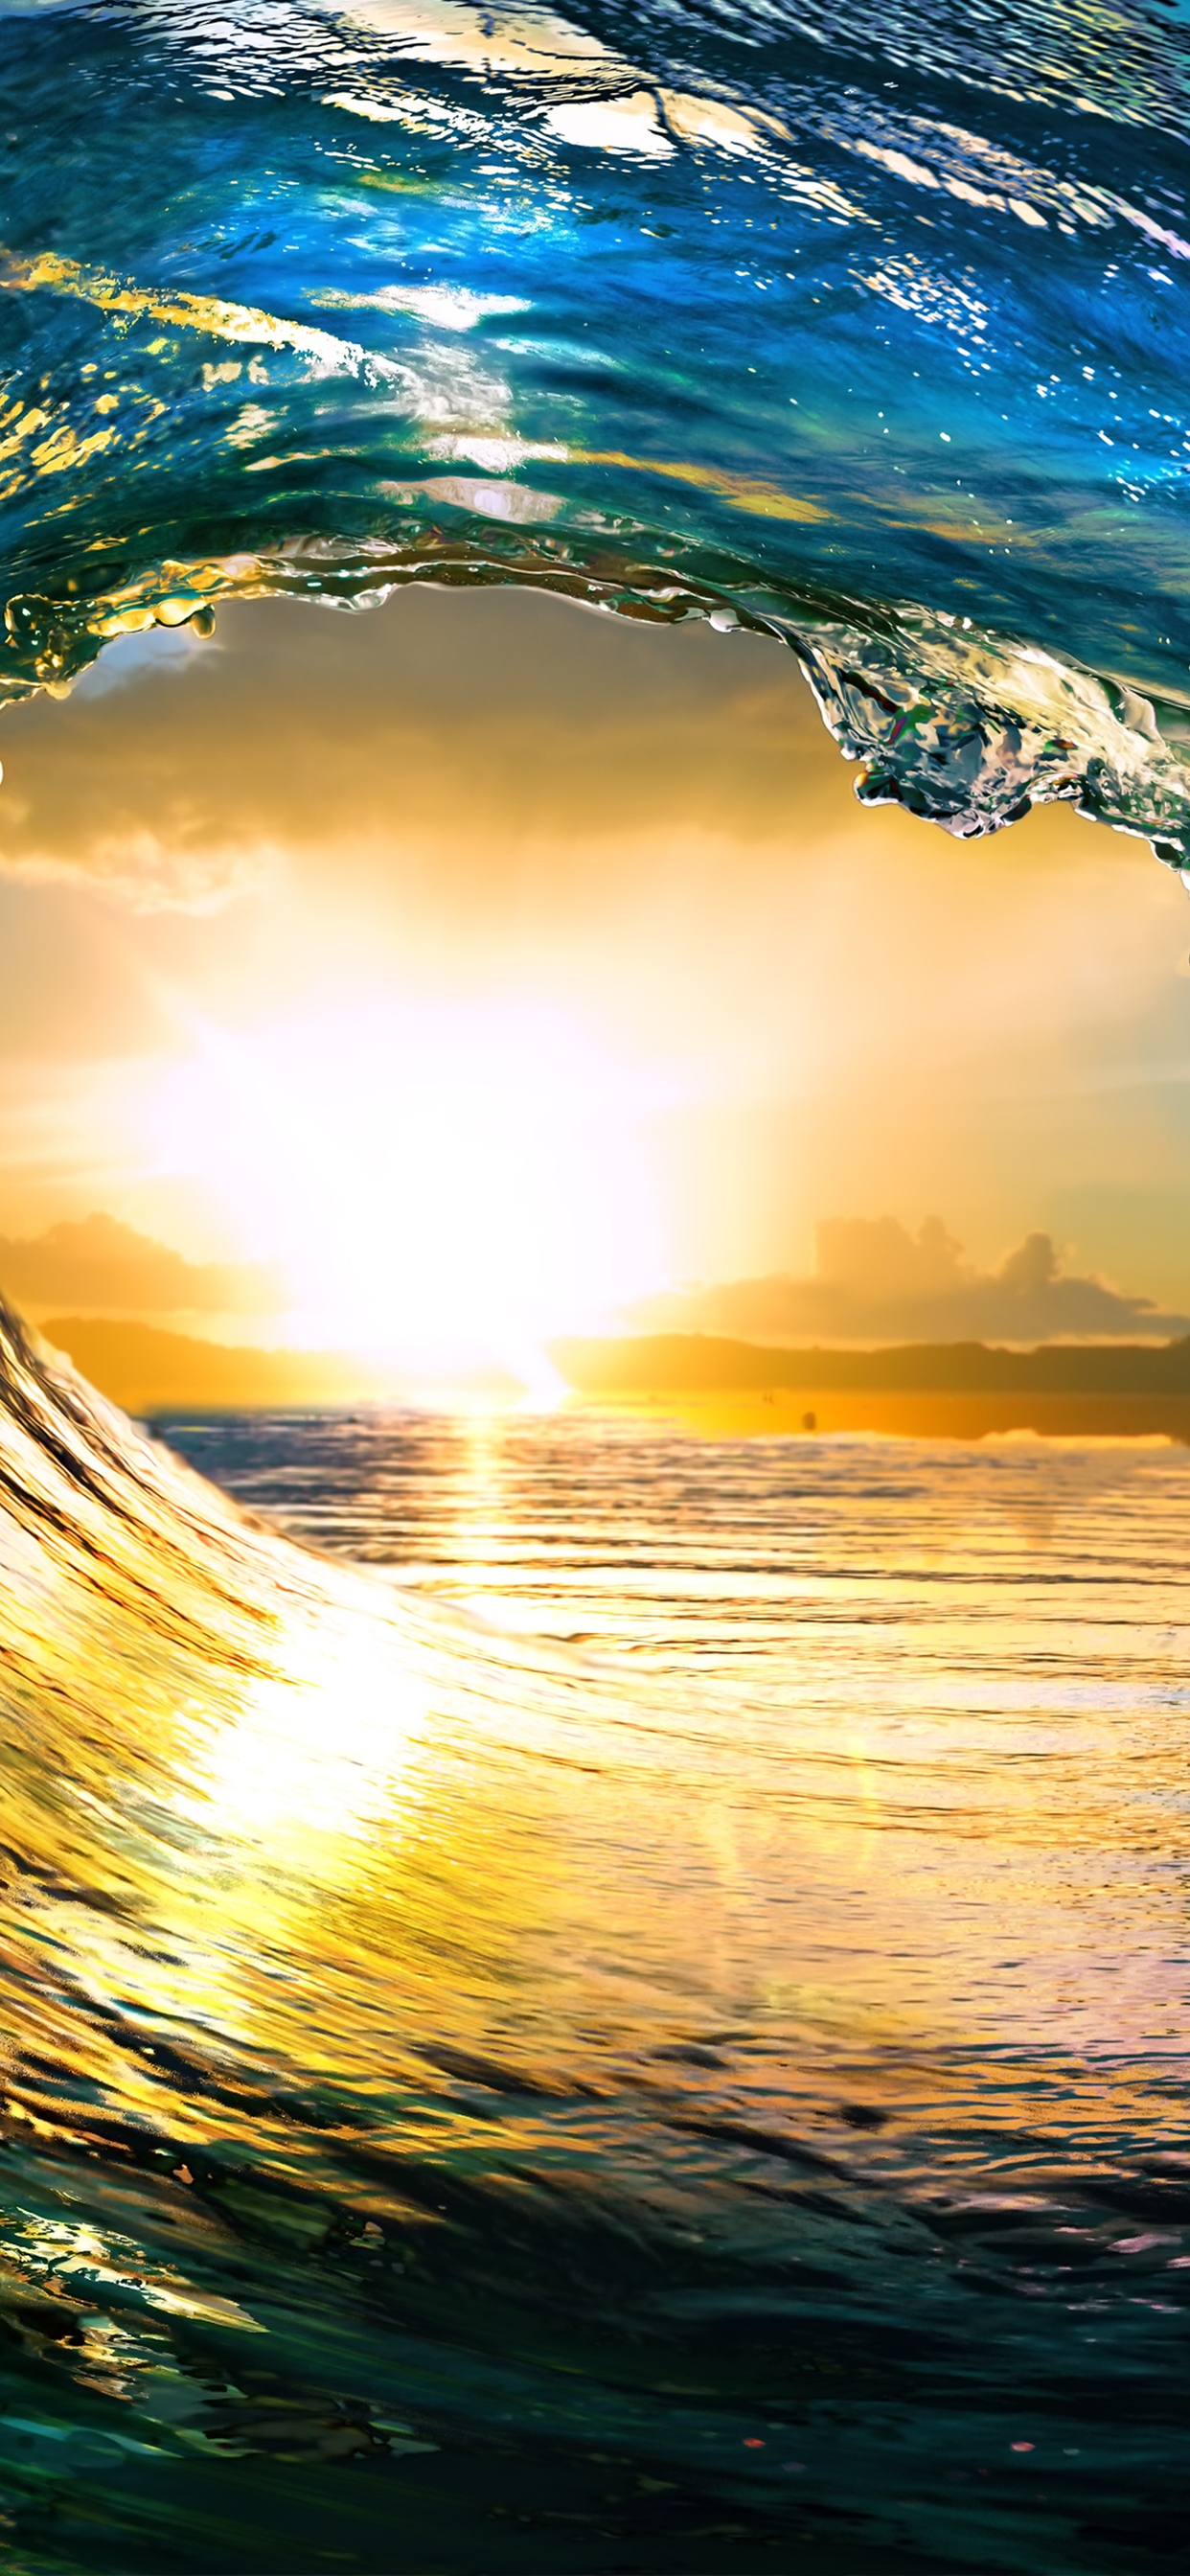 Image: Wave, water, sea, sun